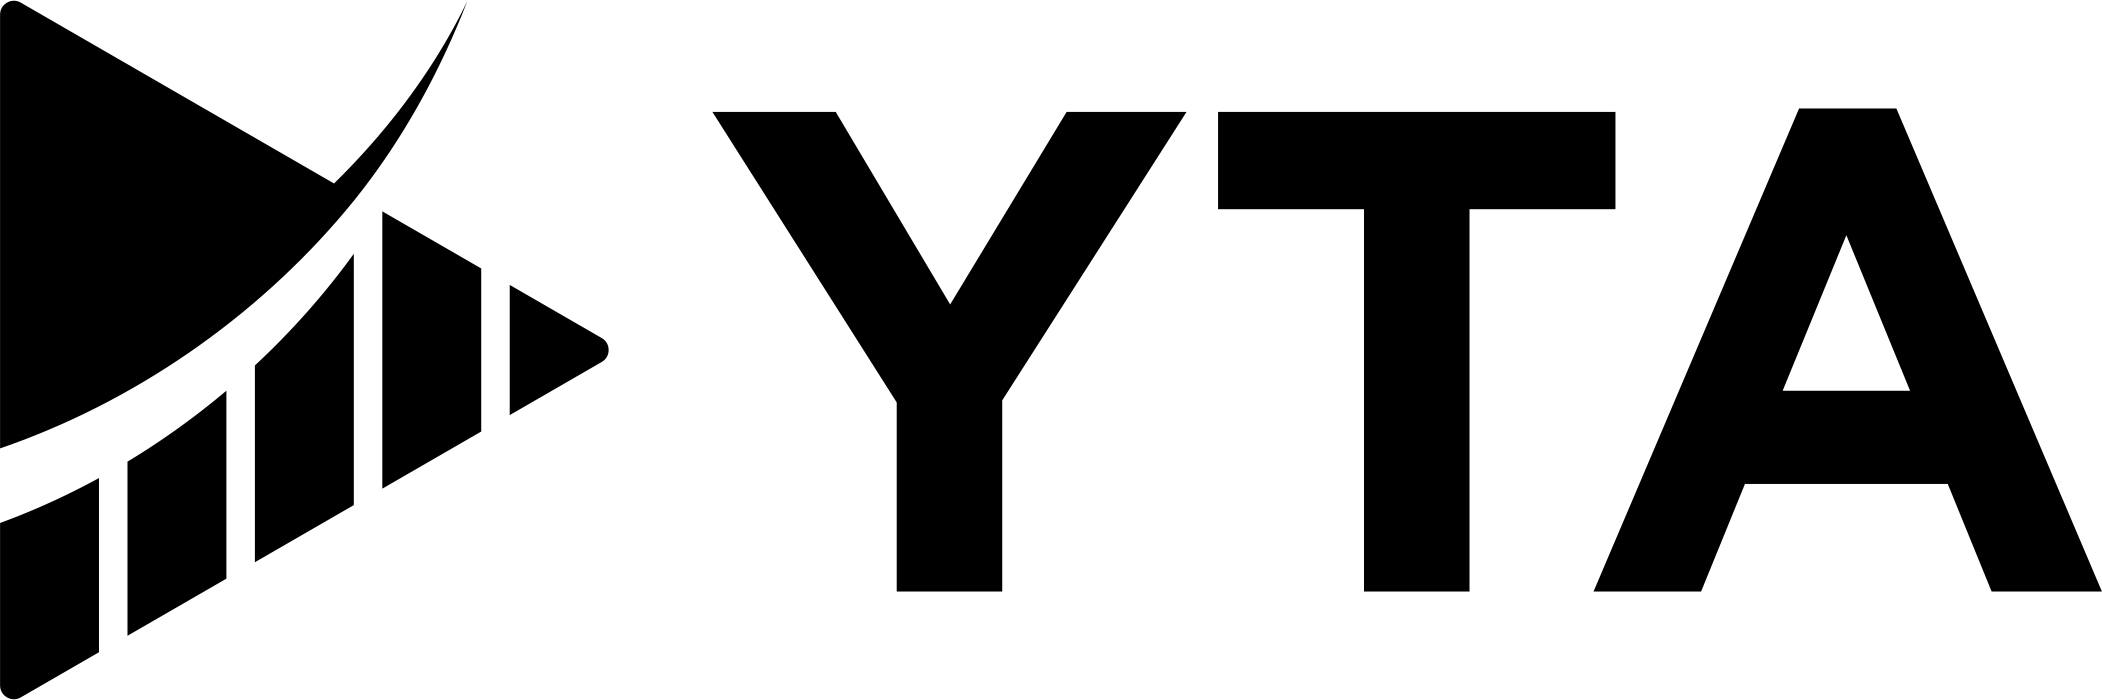 Is YTA Method A Scam?